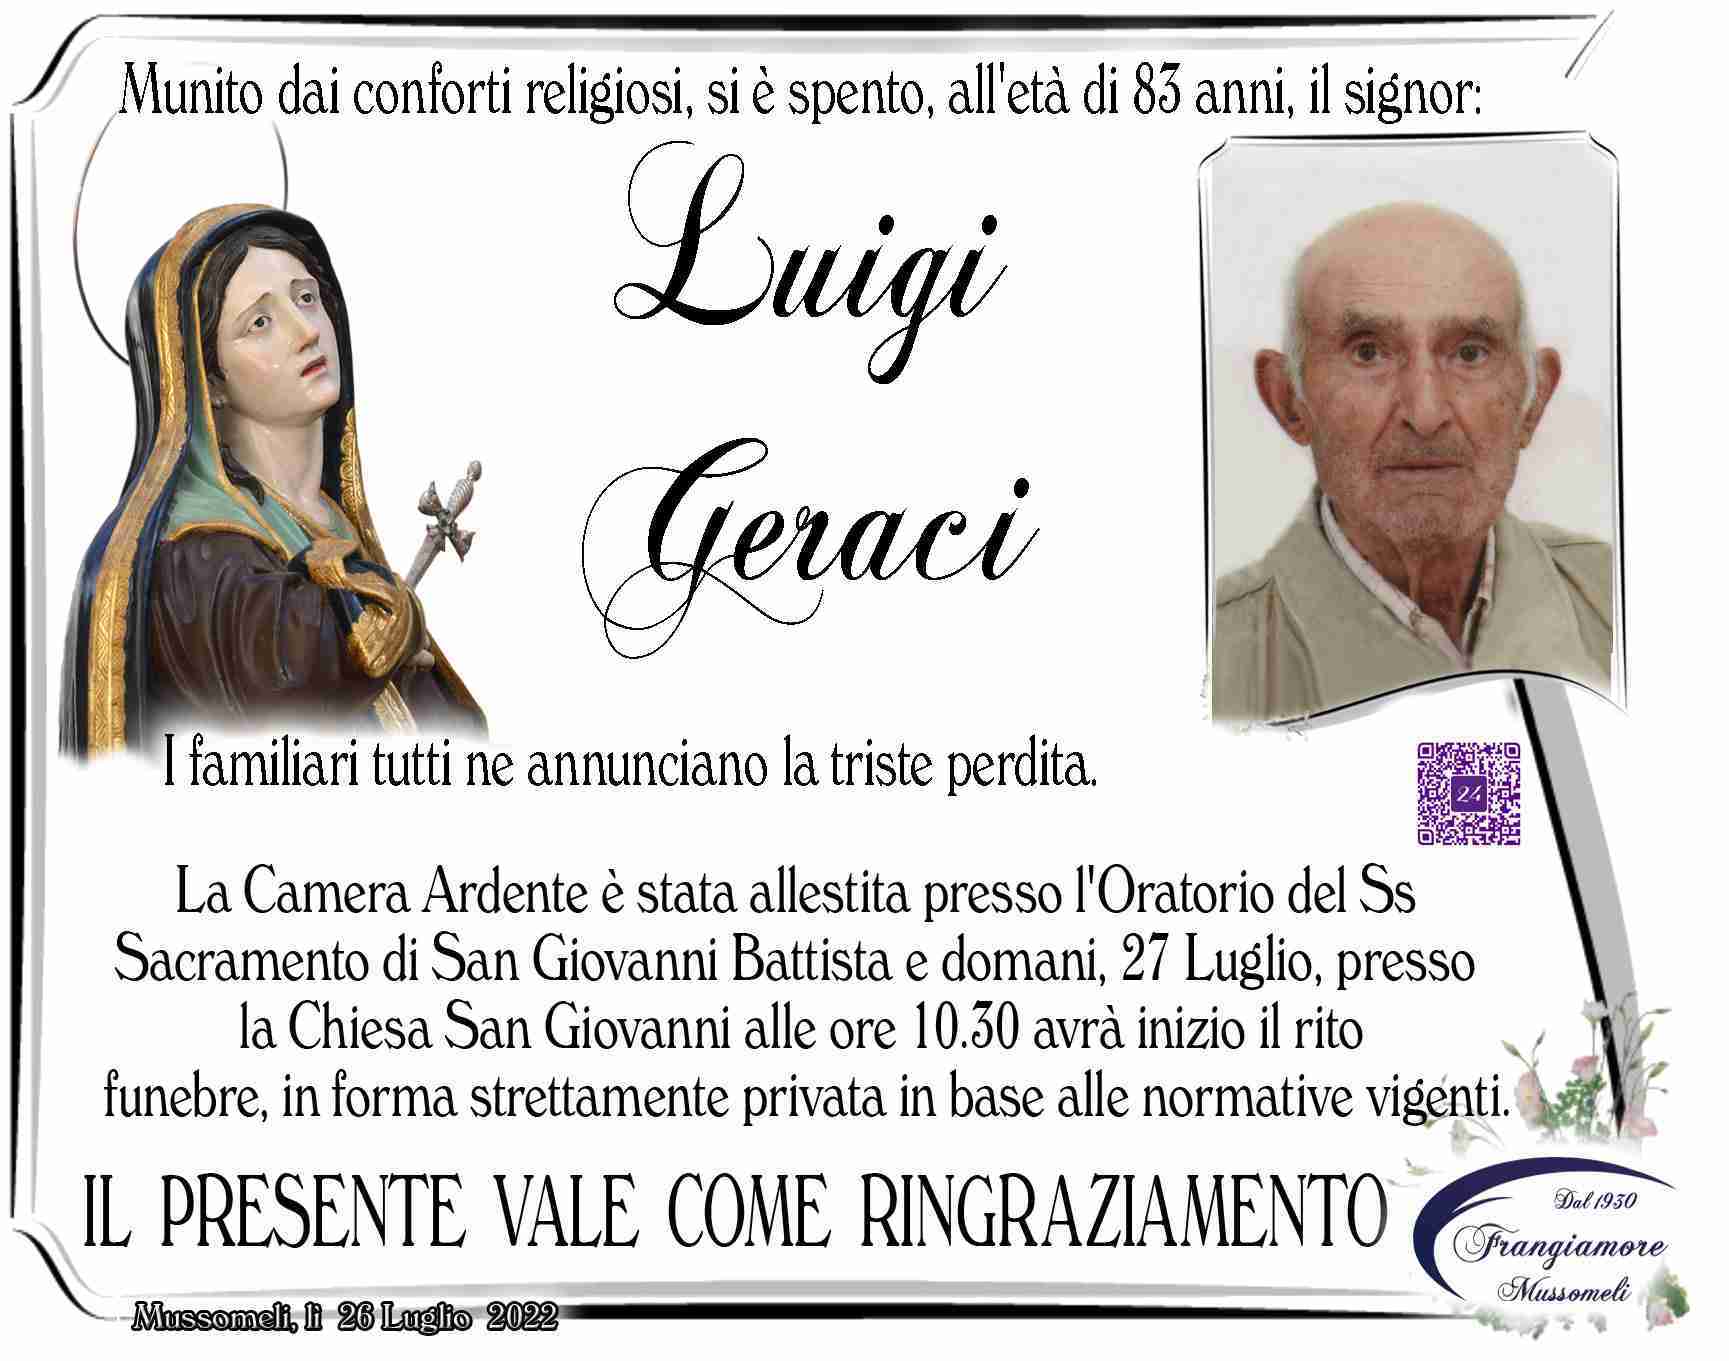 Luigi Geraci